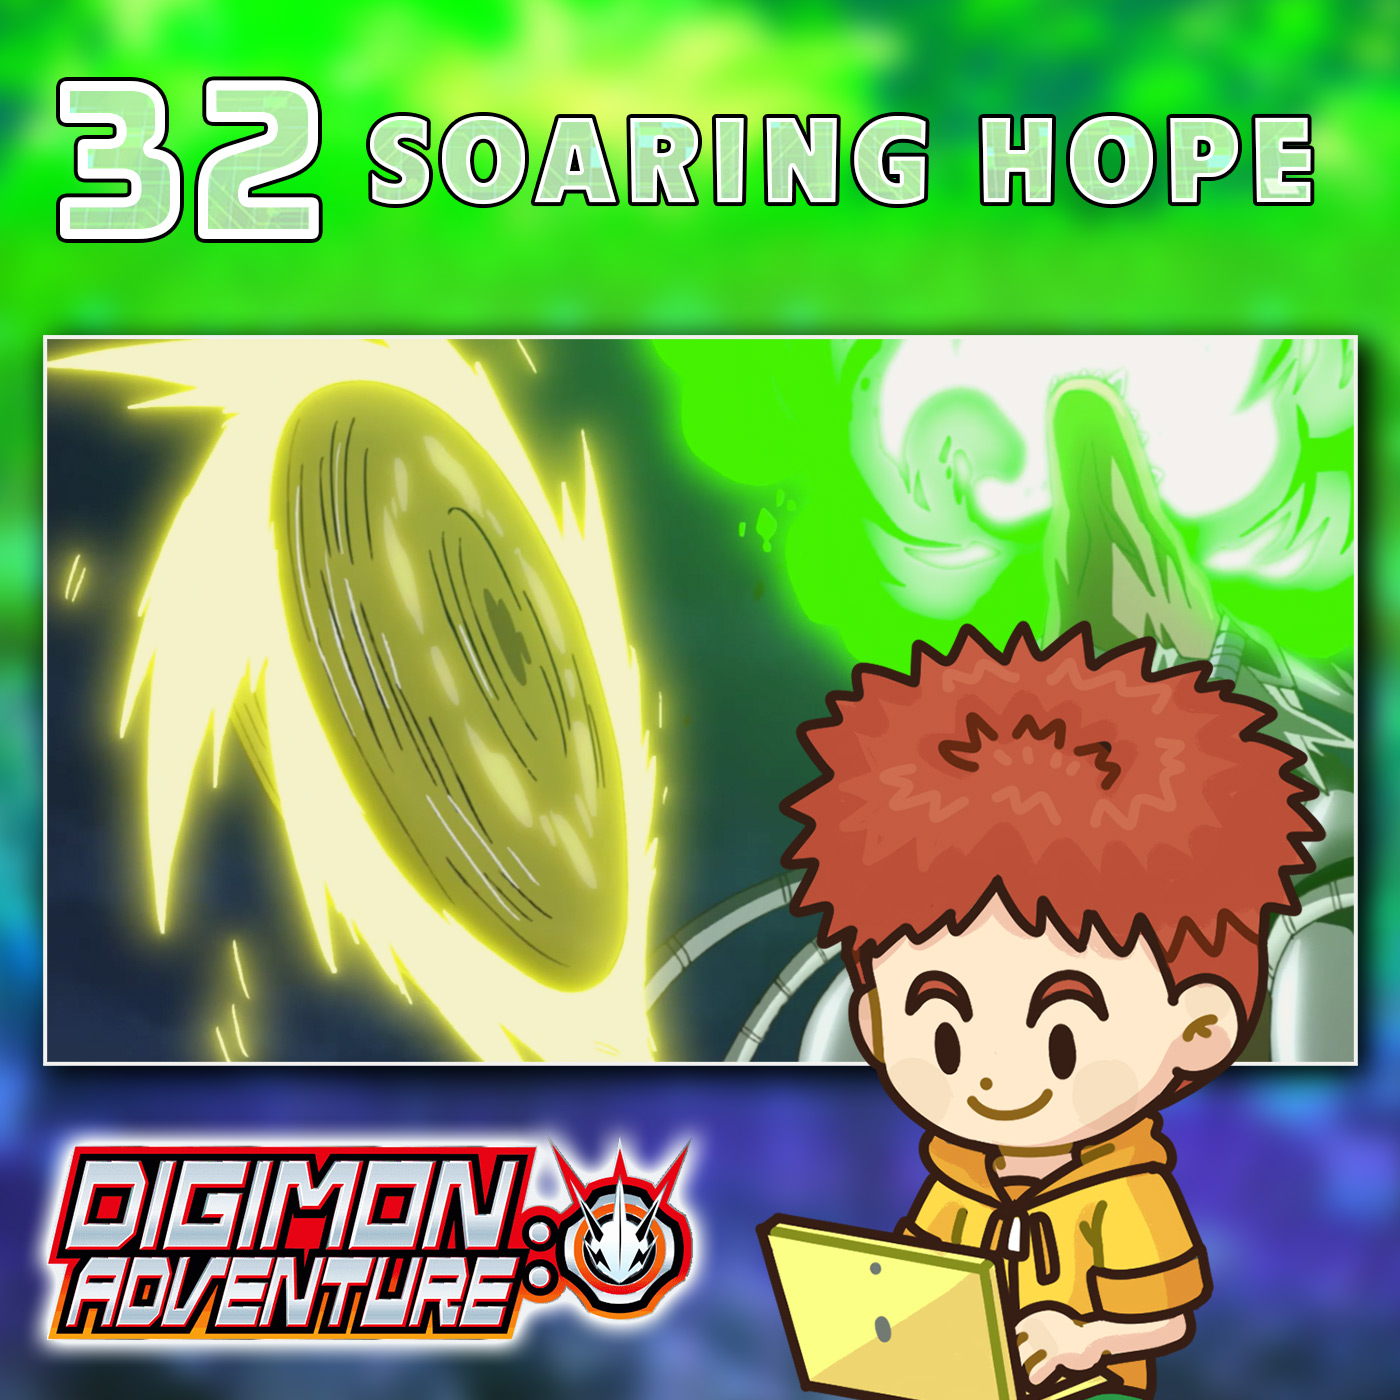 Podigious! Digimon Adventure 2020 Episode 67 “The End of the Adventure”